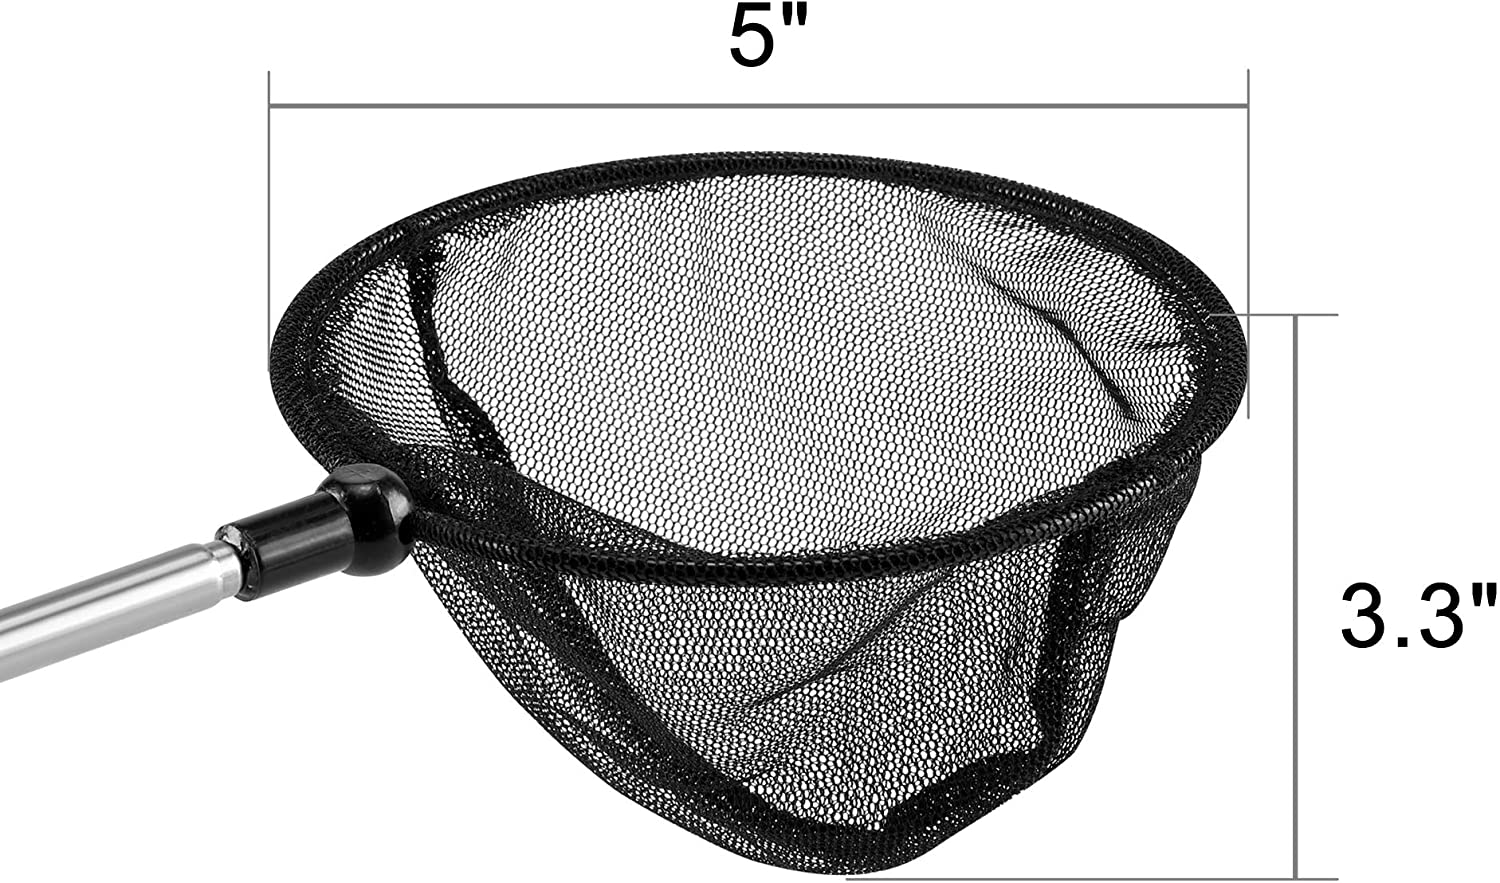 Filhome Telescopic Aquarium Fish Net, Fine Mesh round Fish Net for